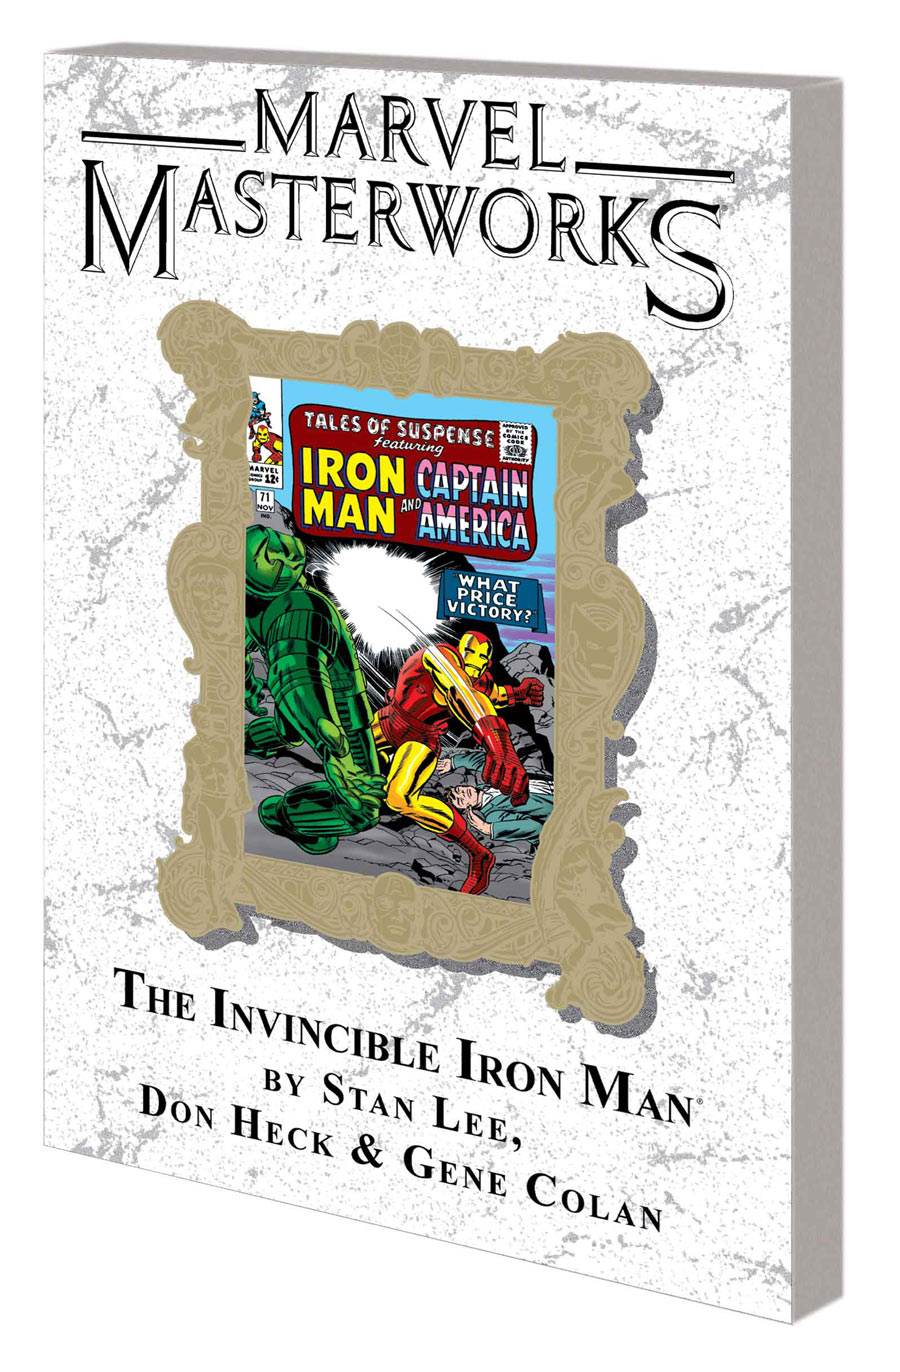 MARVEL MASTERWORKS: THE INVINCIBLE IRON MAN VOL. 3 TPB (Variant)